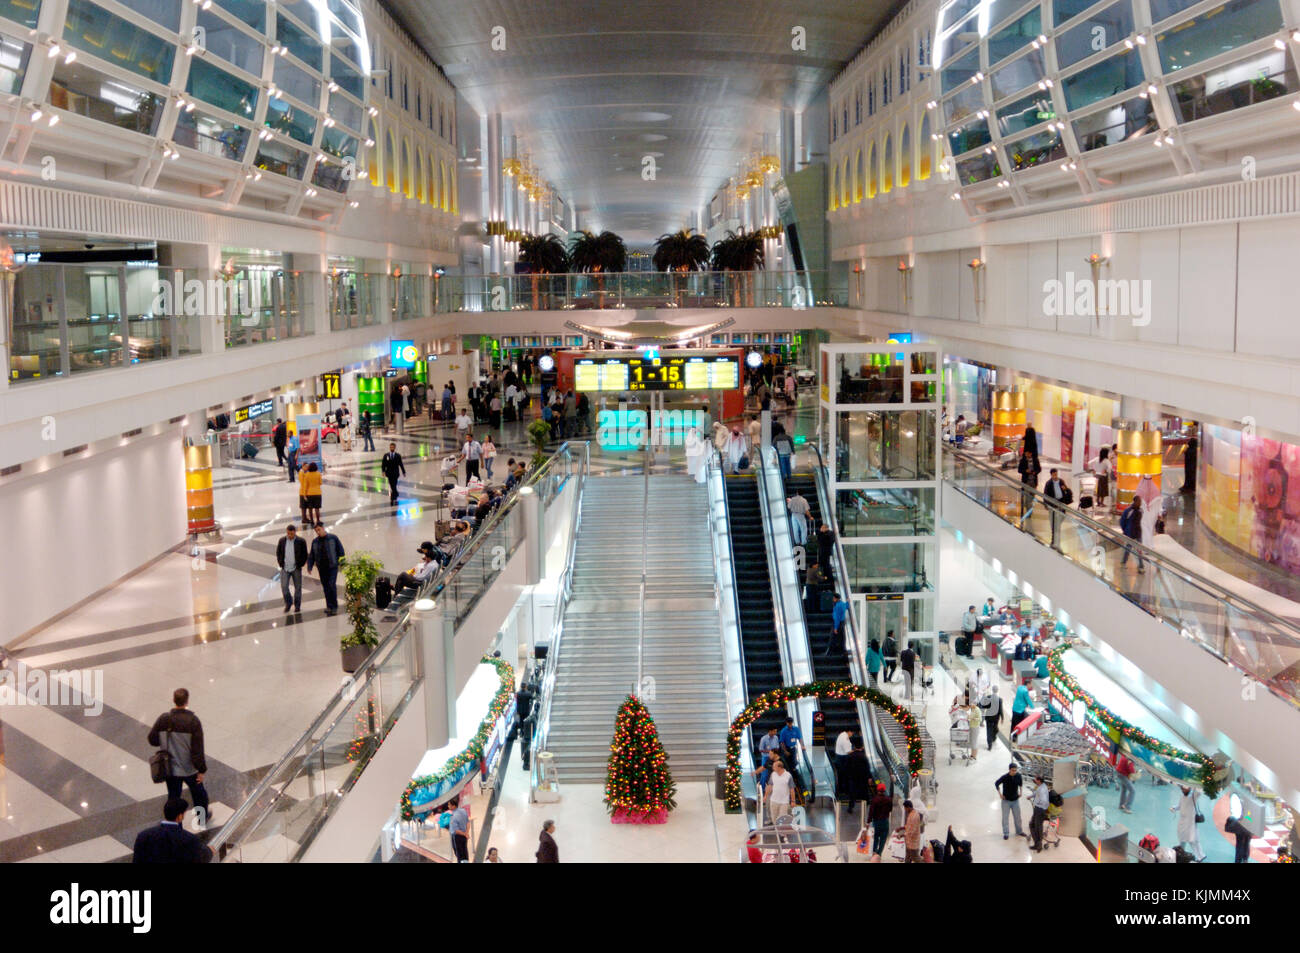 The Sheikh Rashid passenger terminal at Dubai International airport. Elevated view, passengers using travelators and smooth escalators between floors. Stock Photo